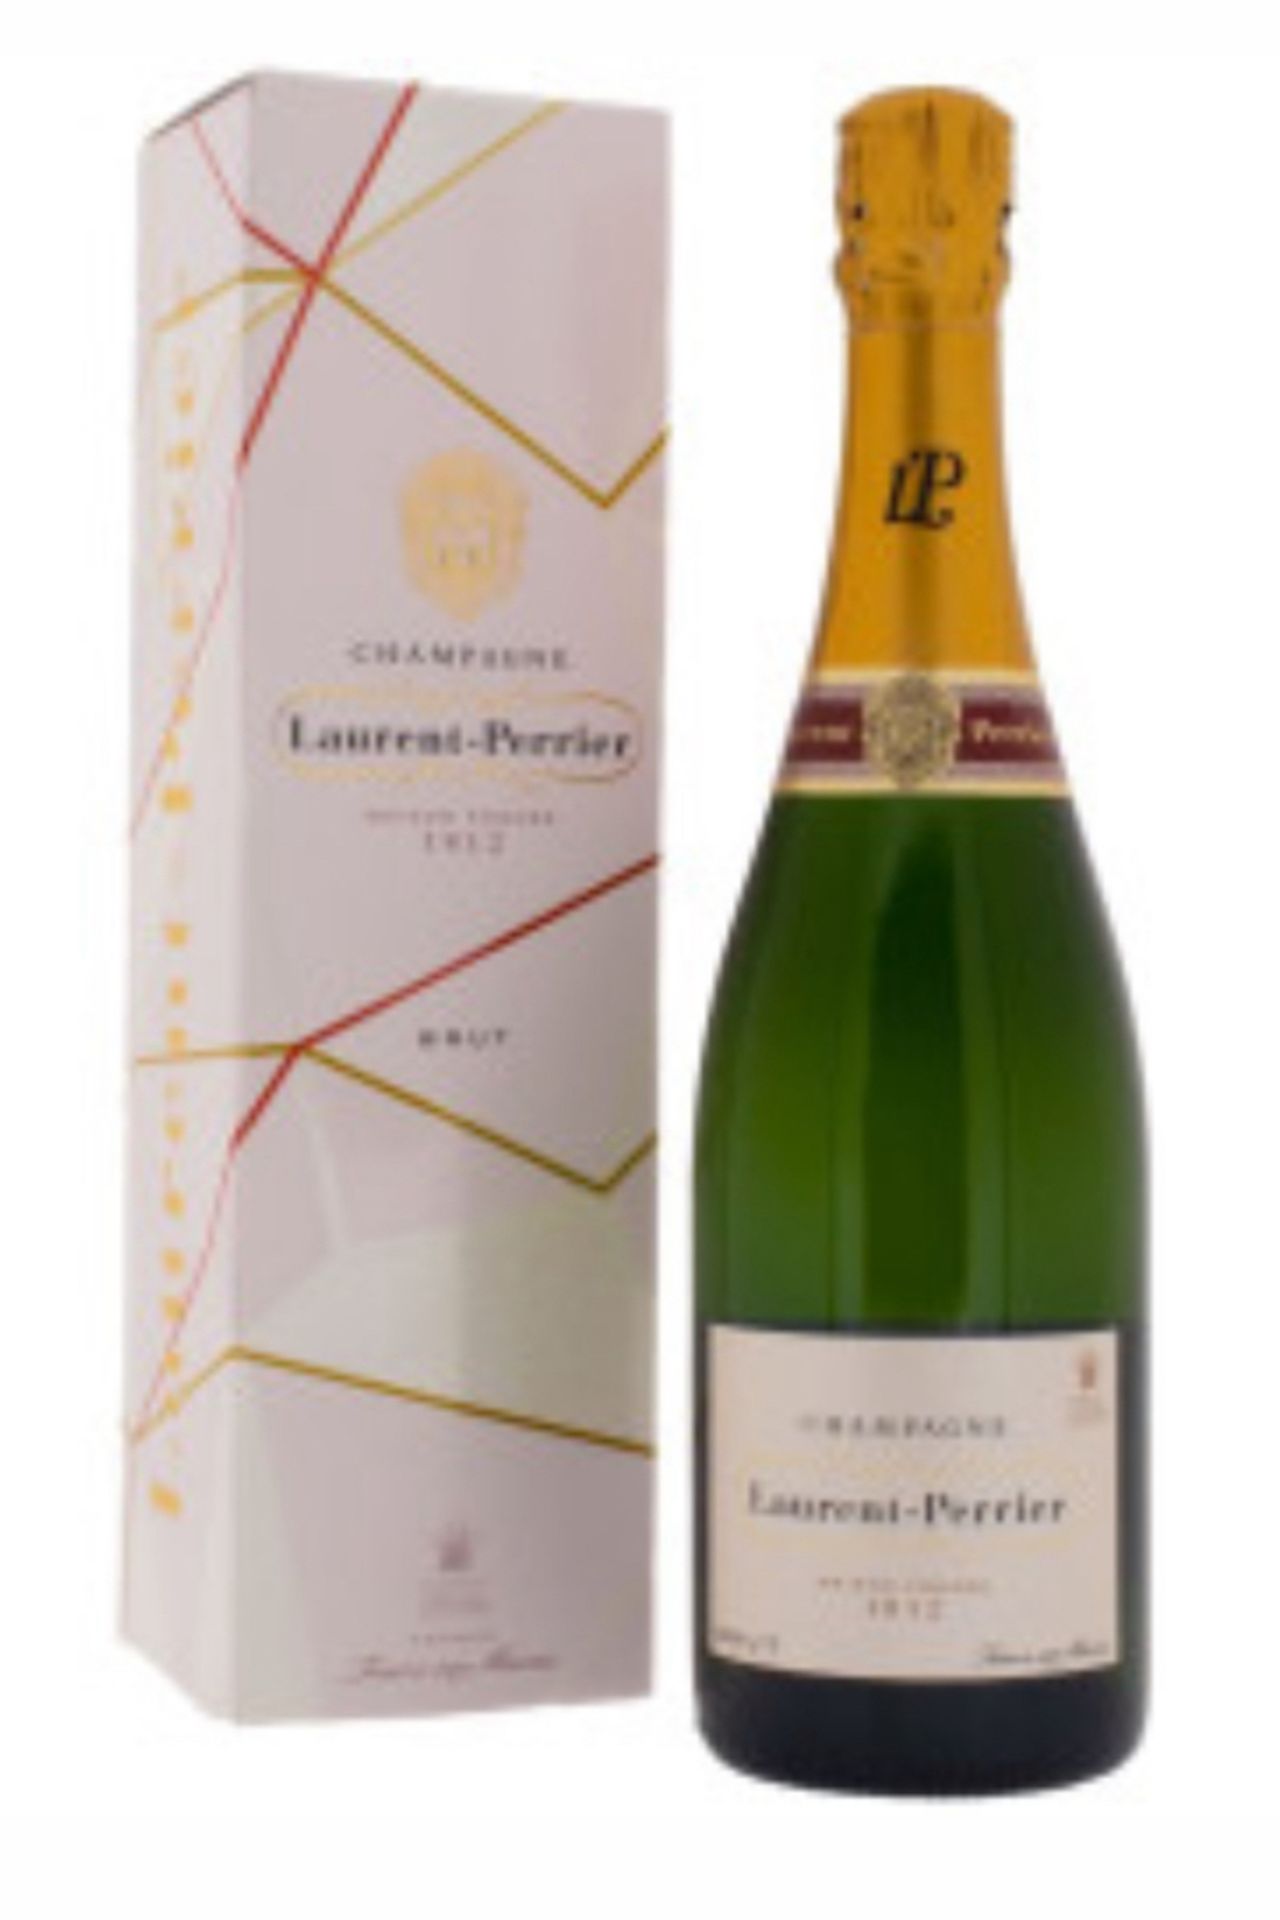 Laurent Perrier 75cl La Cuvee Brut Champagne - New in Box